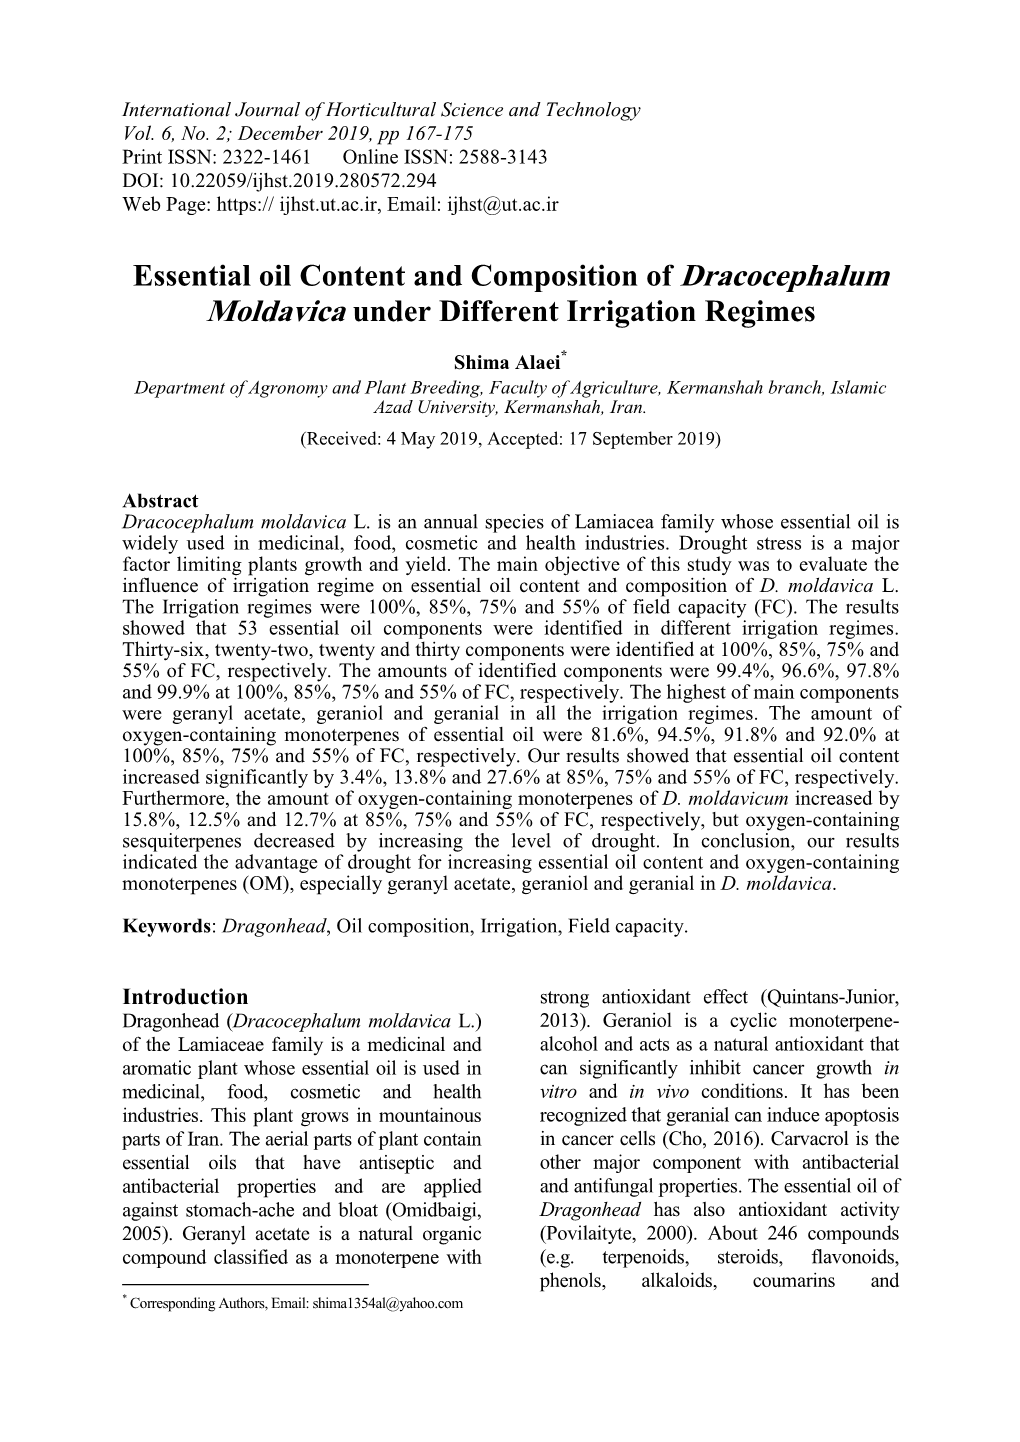 Essential Oil Content and Composition of Dracocephalum Moldavica Under Different Irrigation Regimes